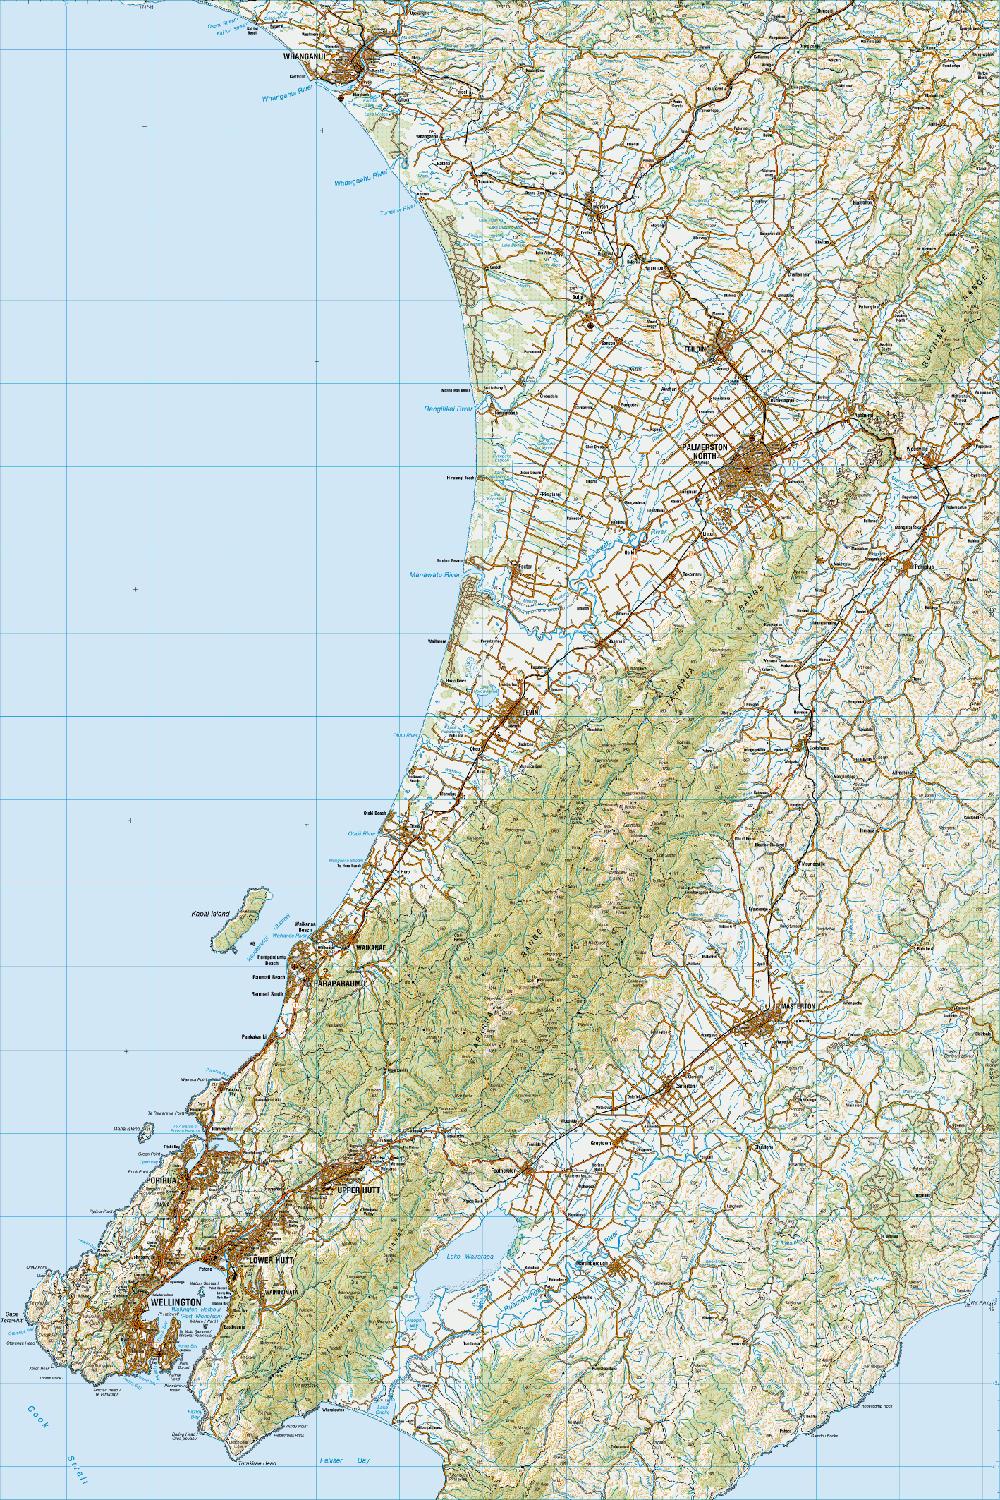 Topo map of Palmerston North